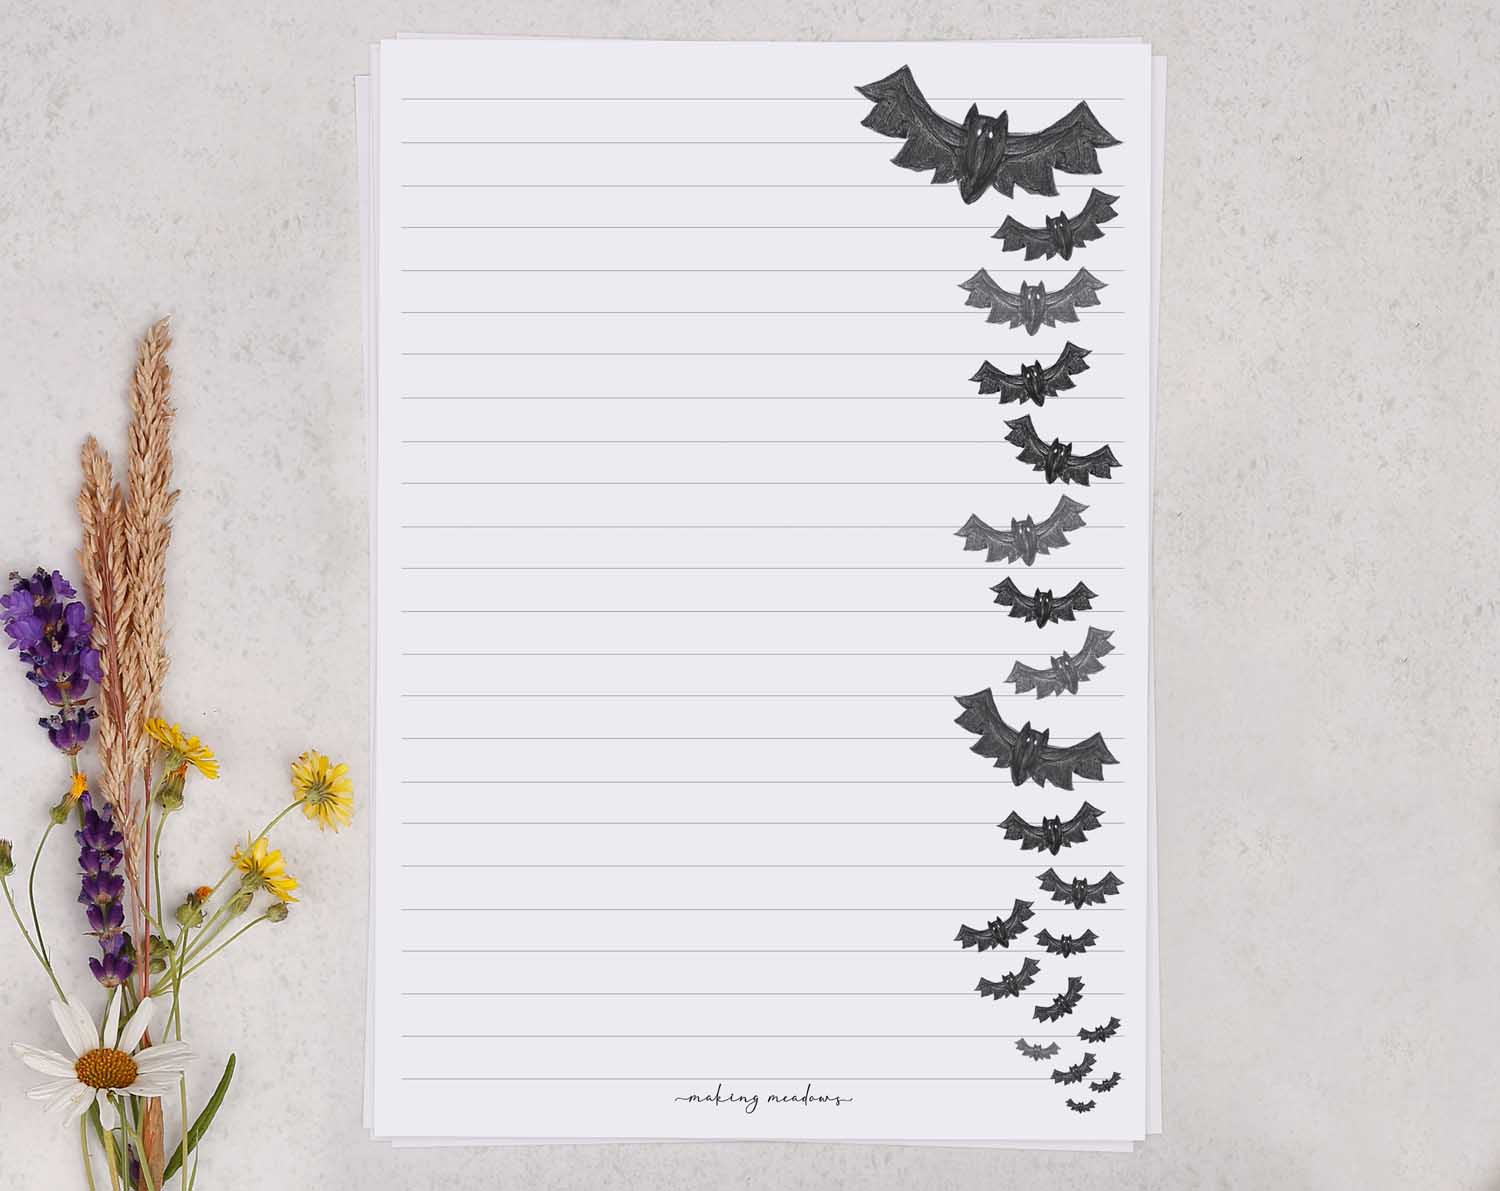 Bat A5 Writing Paper & Envelope Set